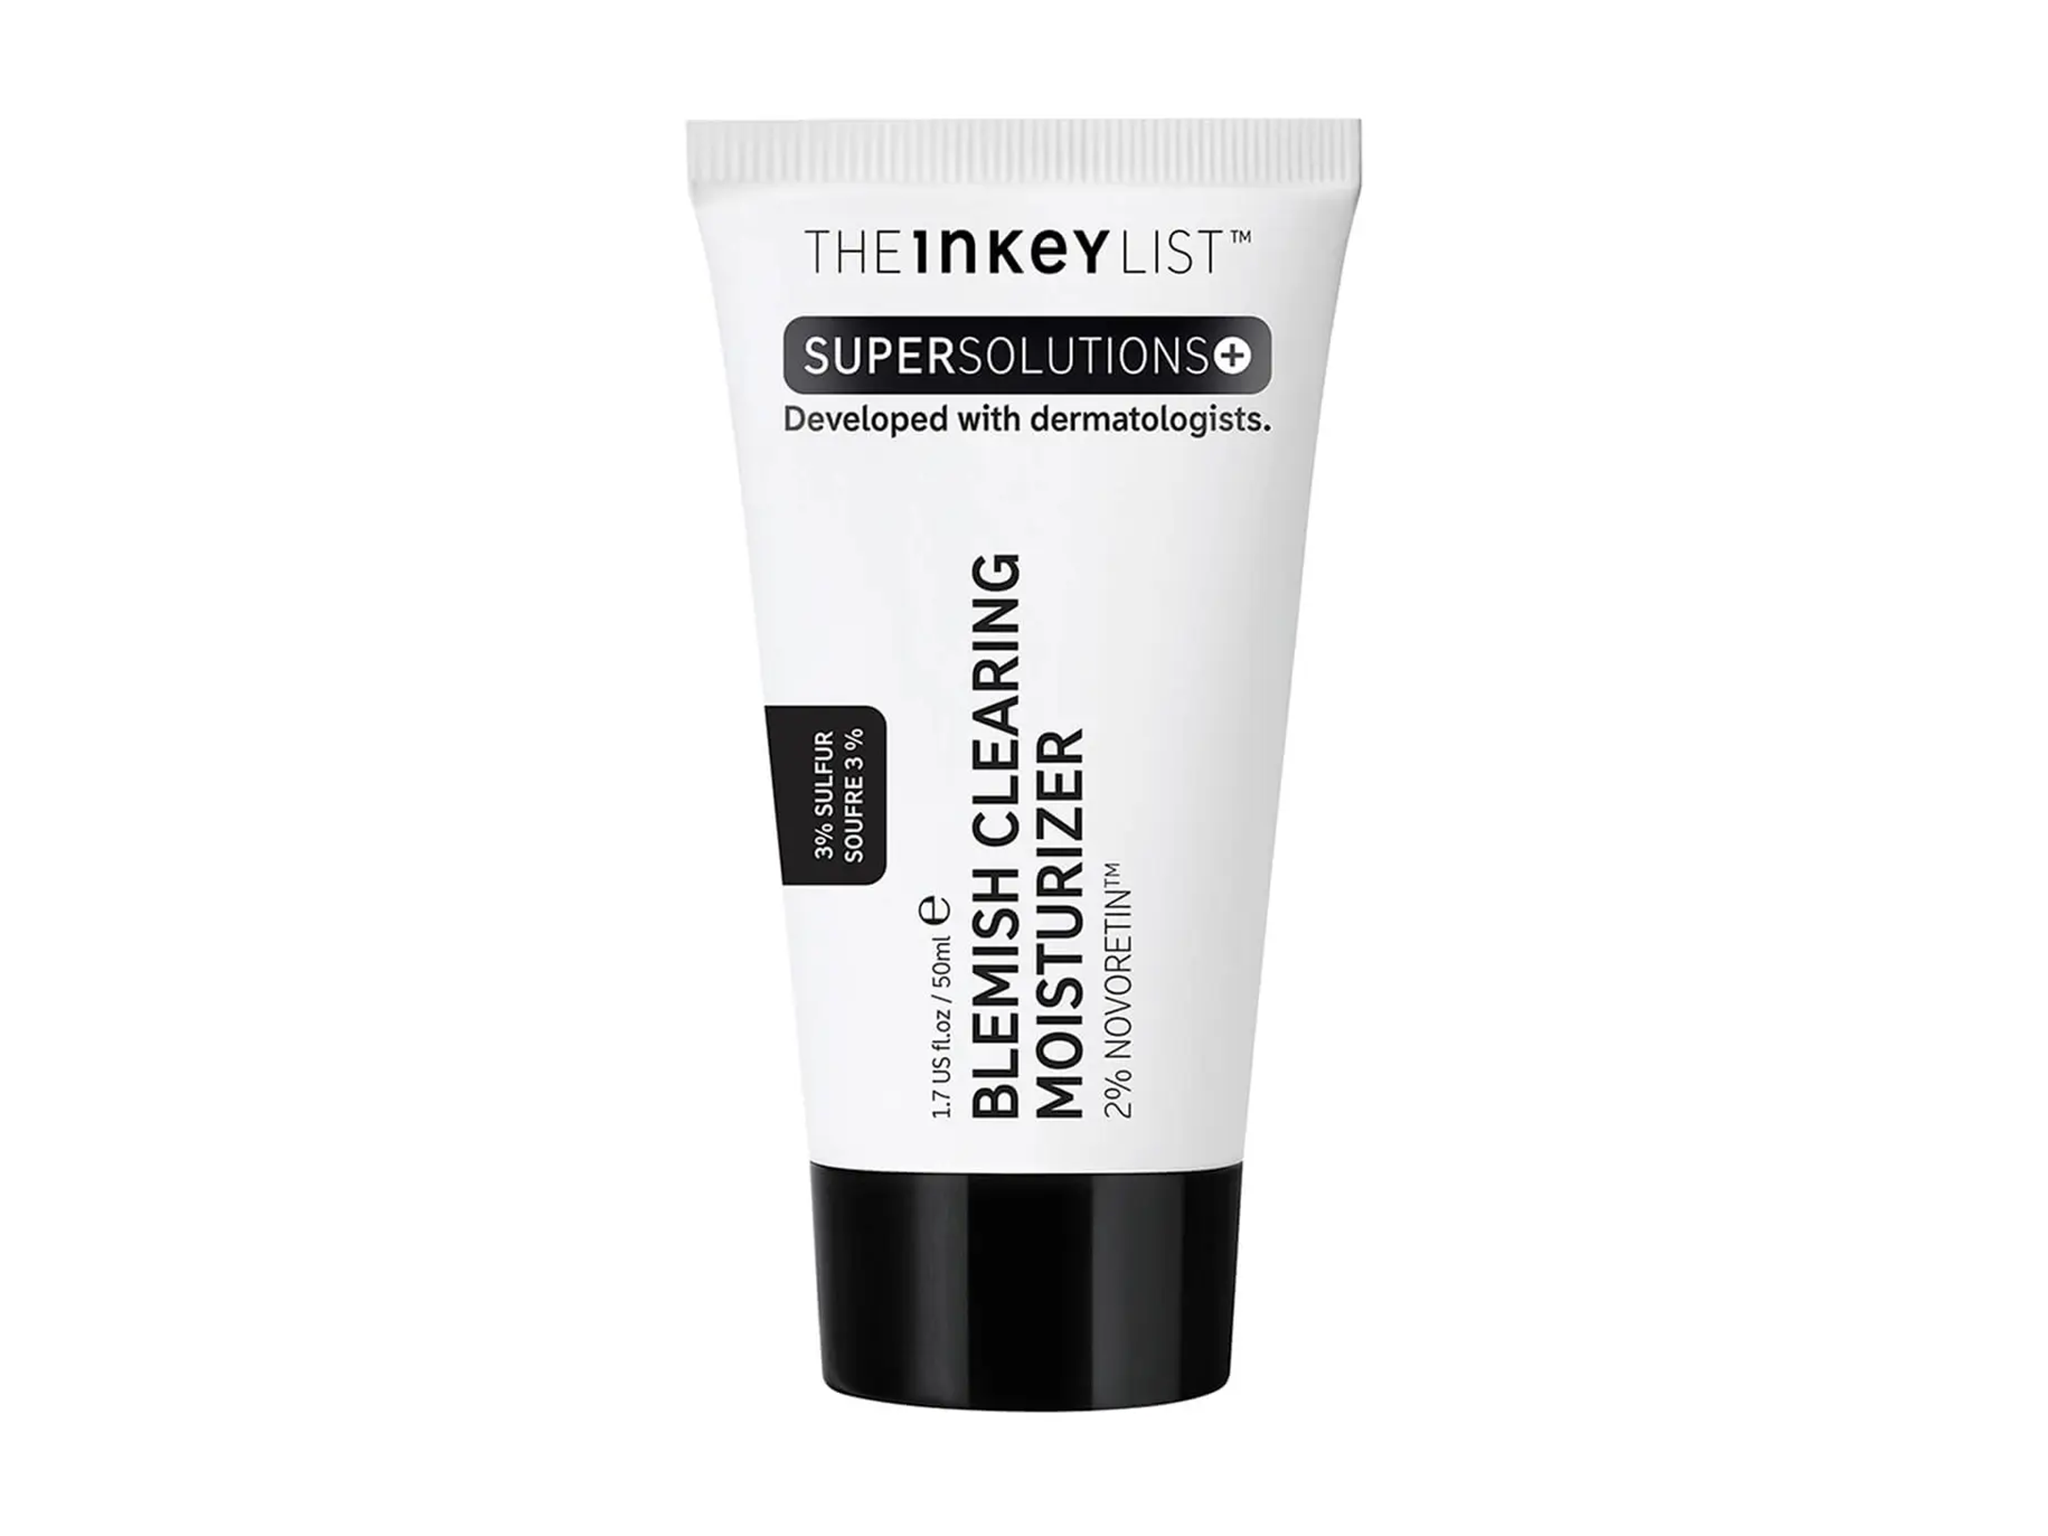 The Inkey List blemish clearing moisturiser